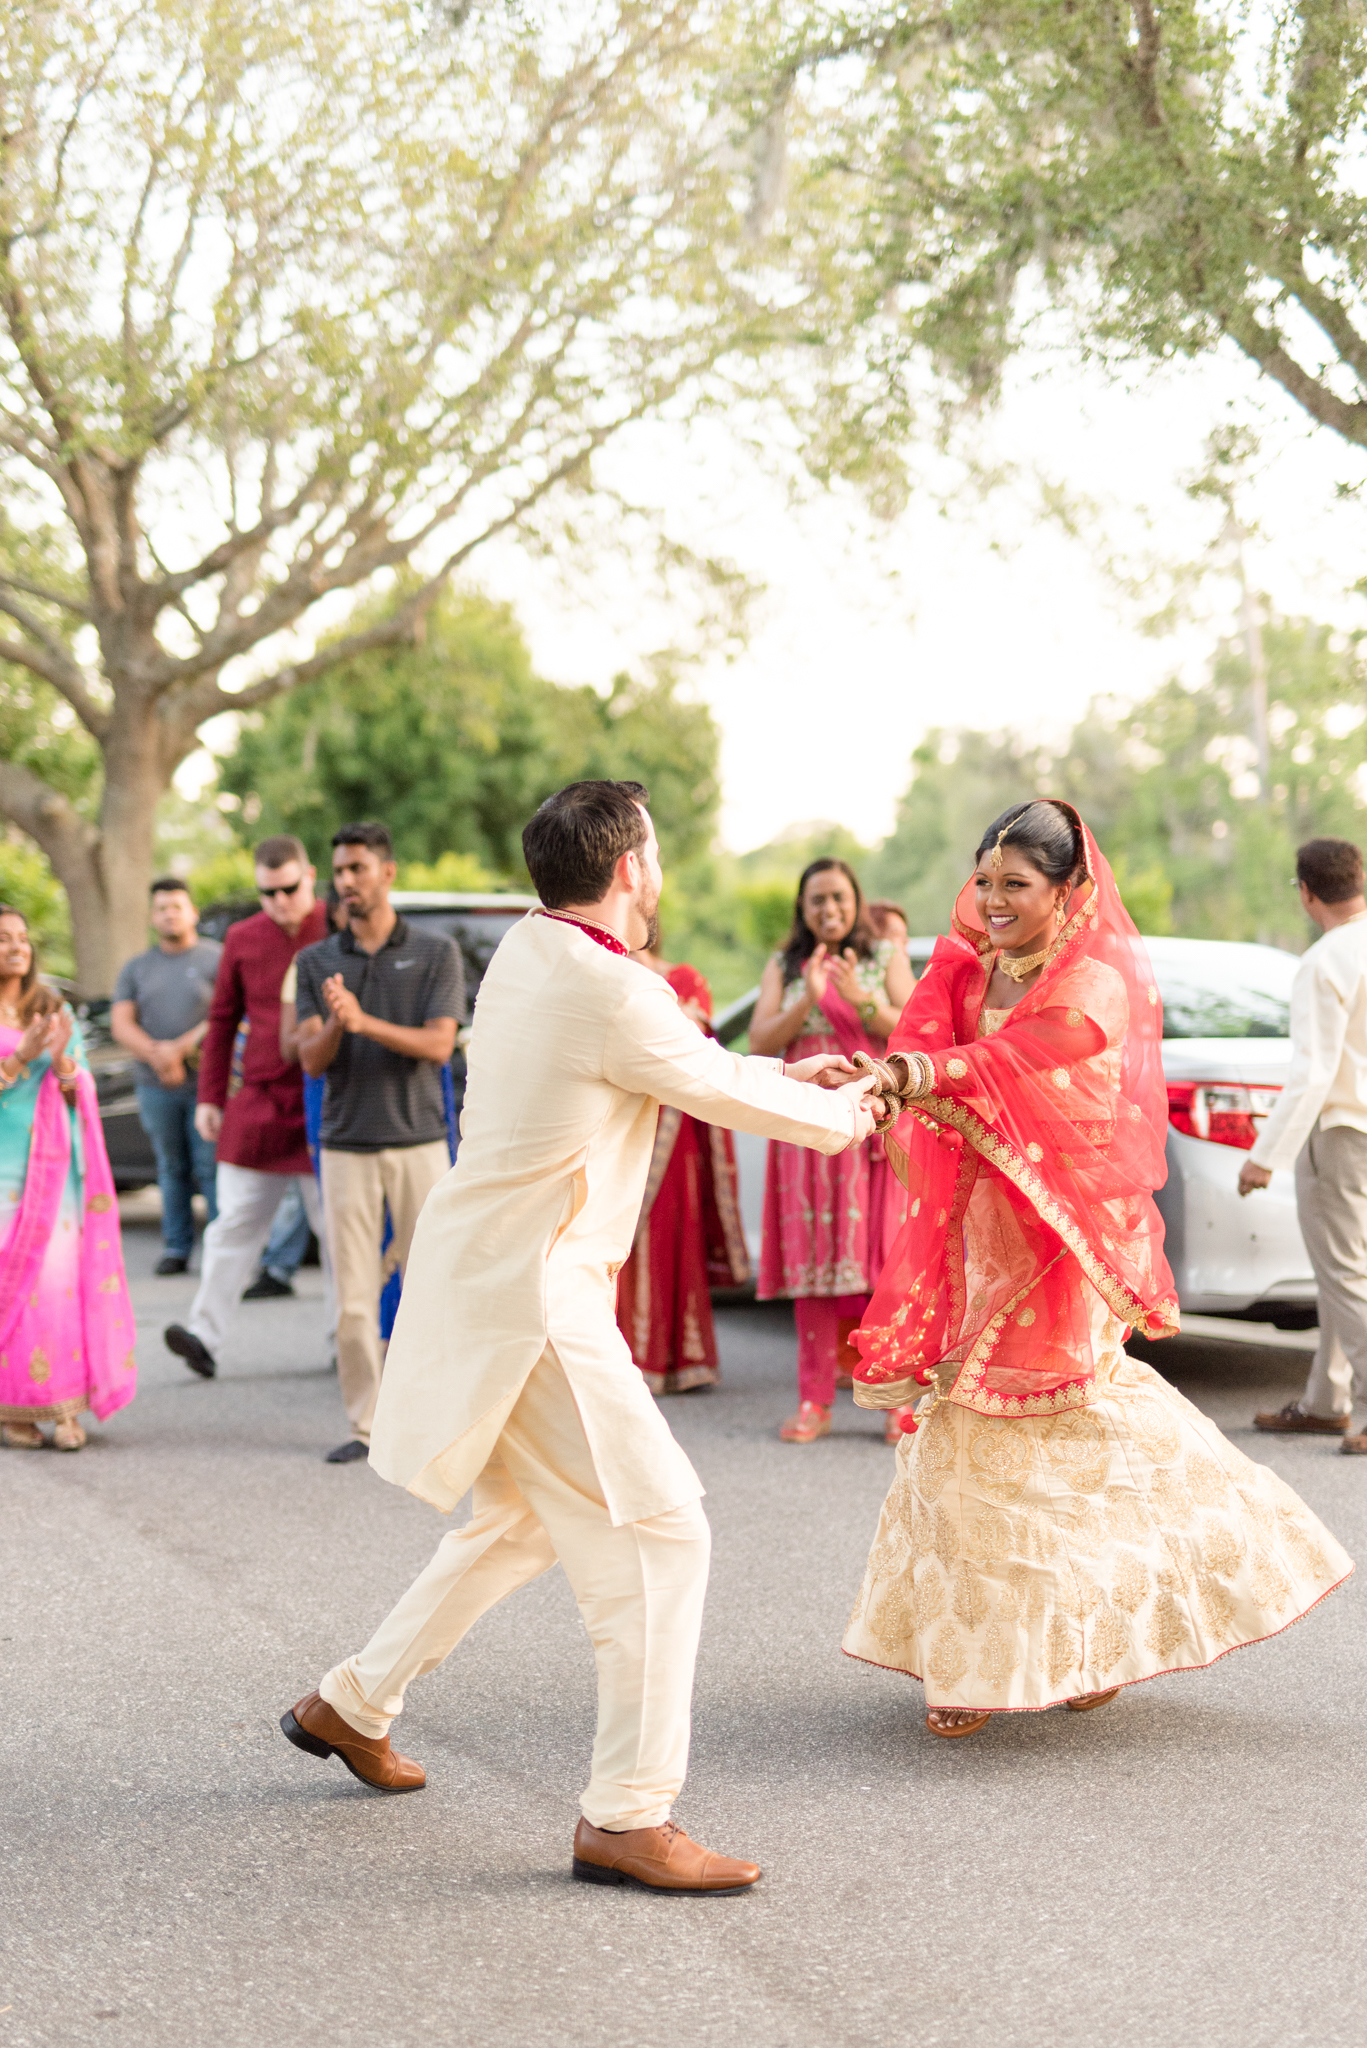 Indian bride and groom dance in street.